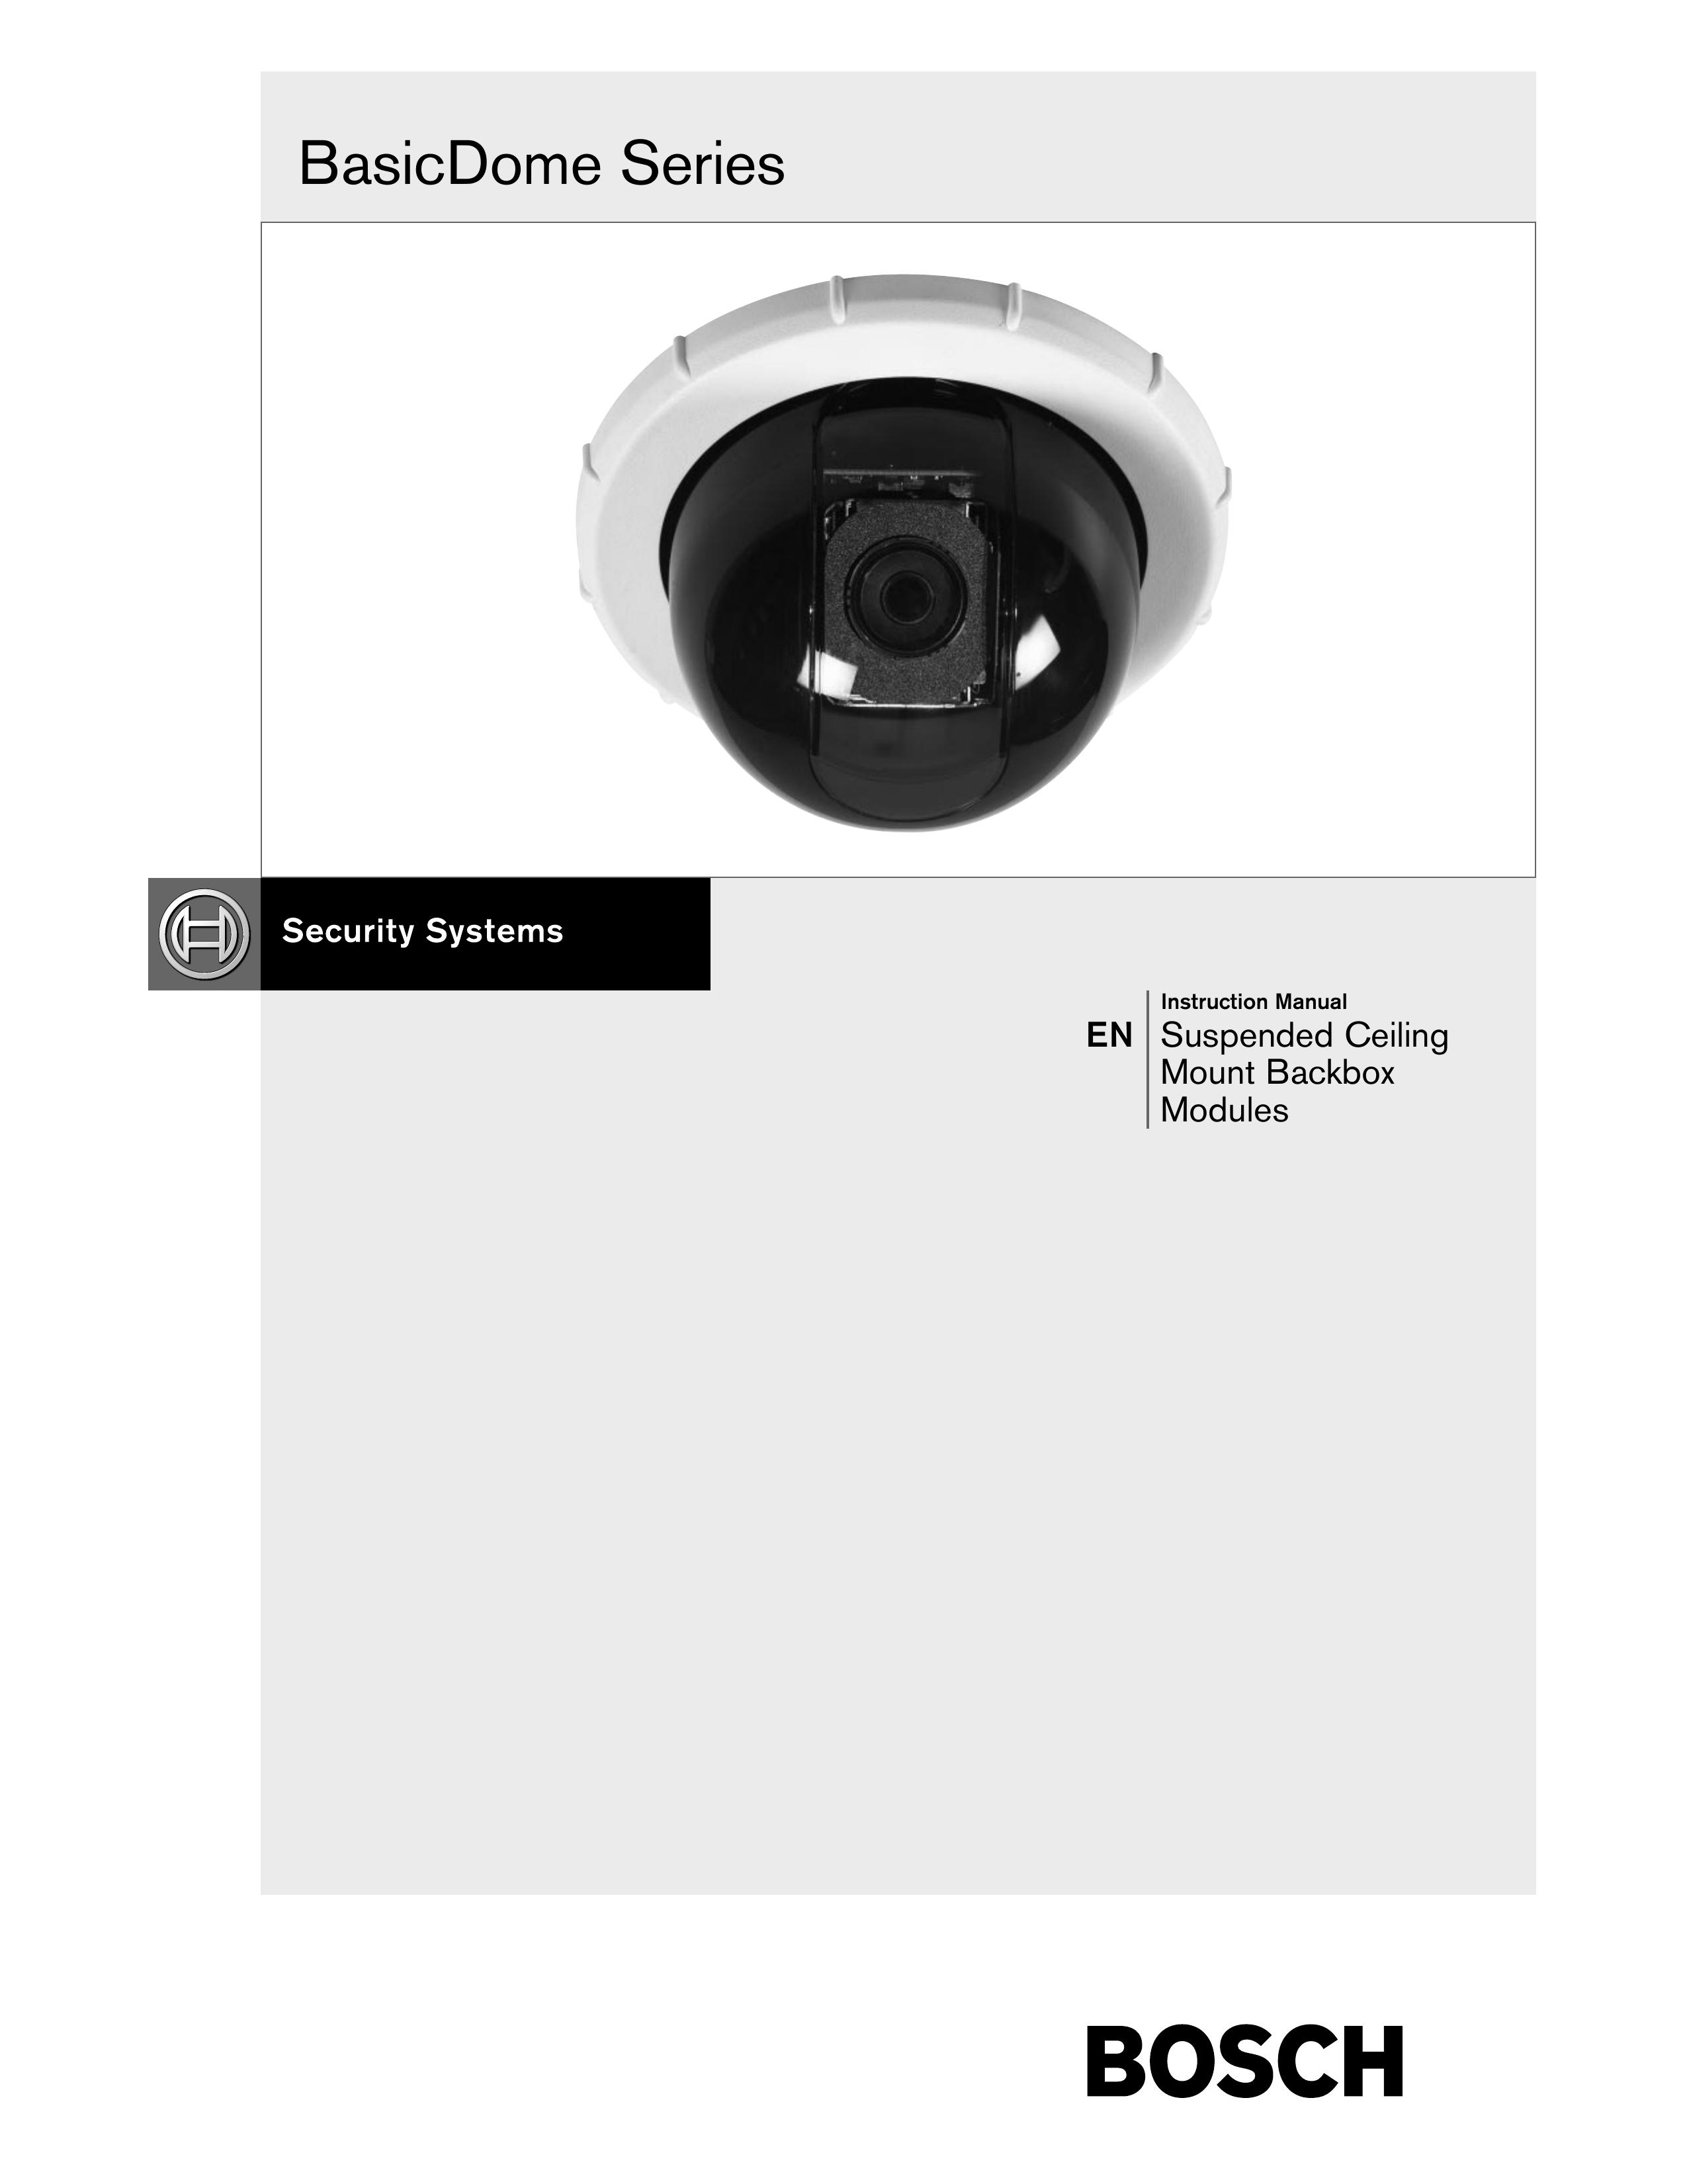 Bosch Appliances BasicDome Series Security Camera User Manual